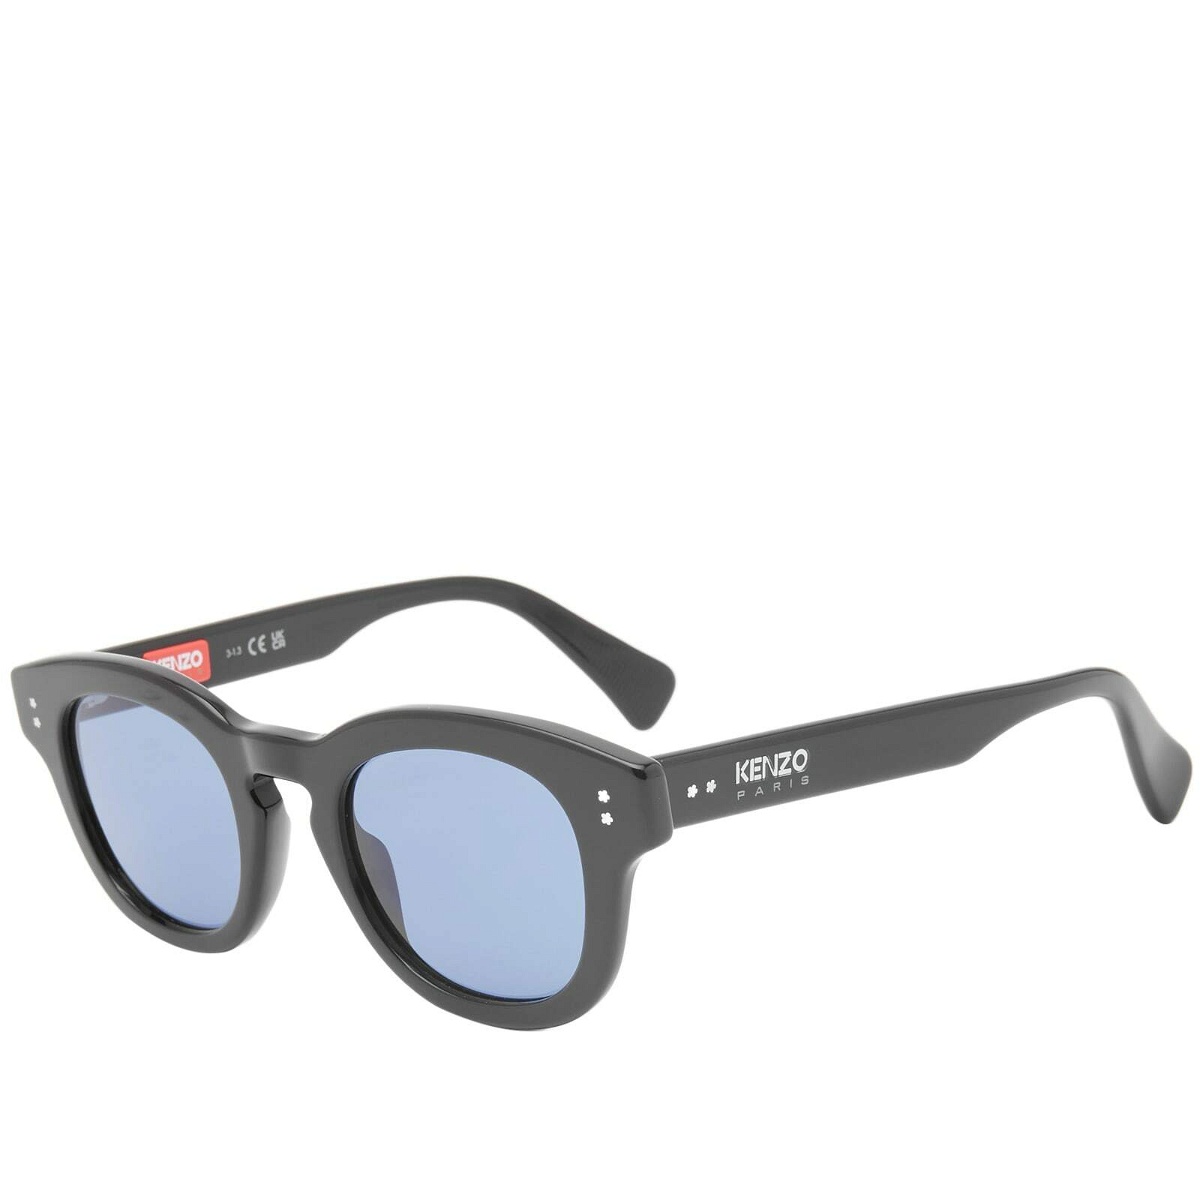 Kenzo Eyewear KZ40163I Sunglasses in Shiny Black/Blue Kenzo